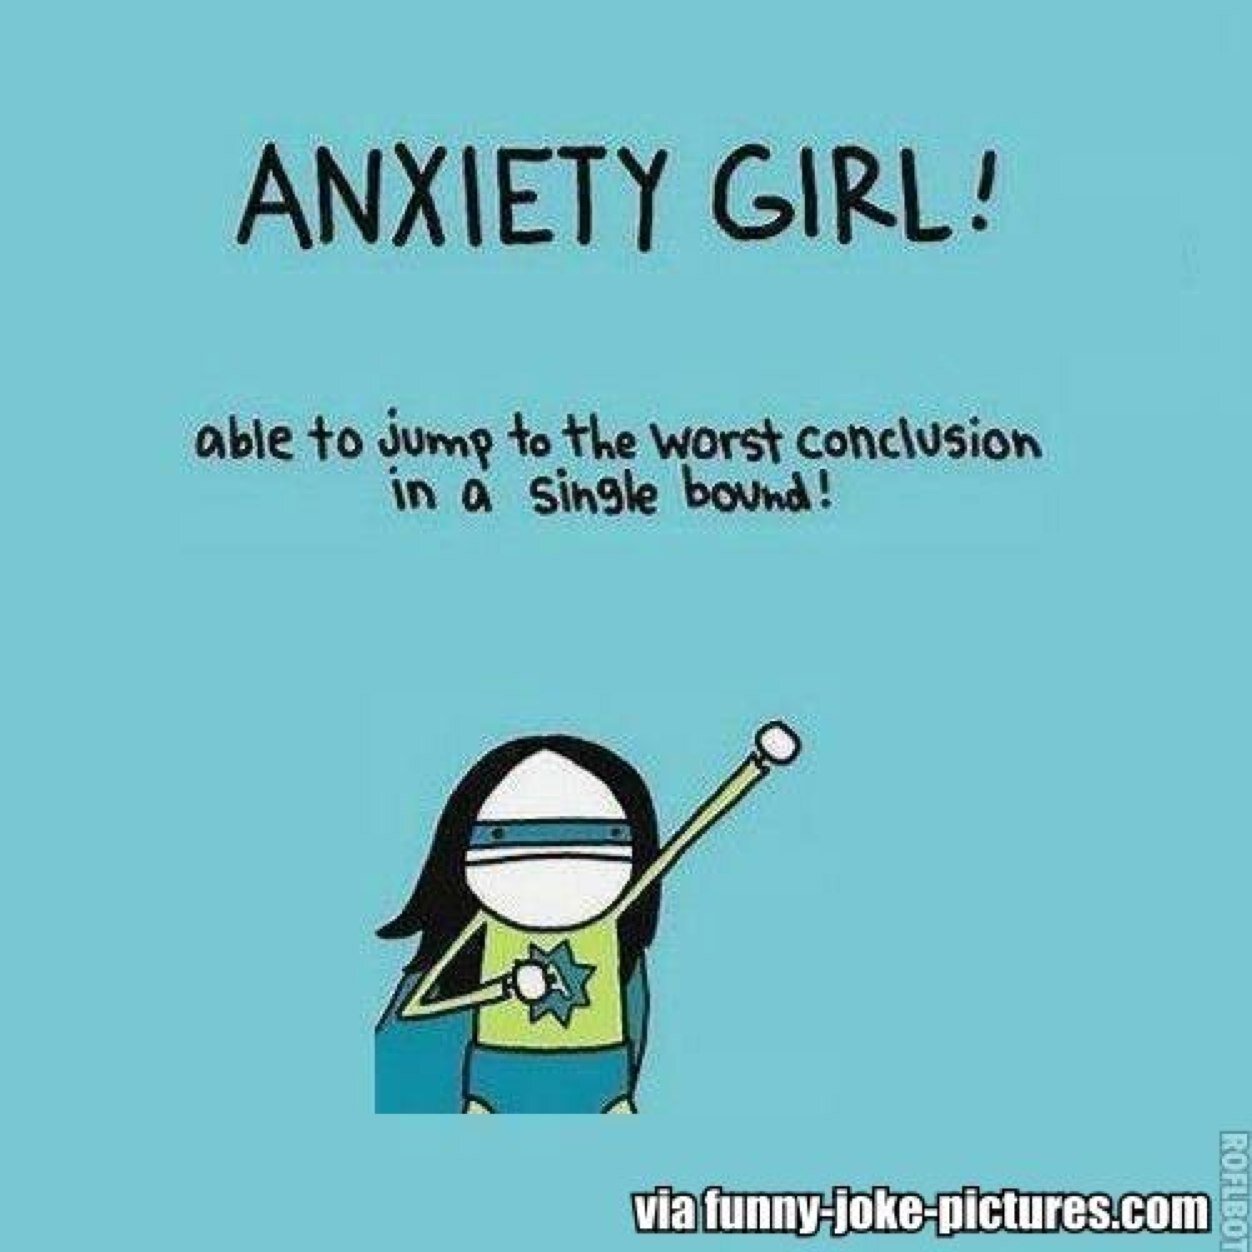 Anxiety girl